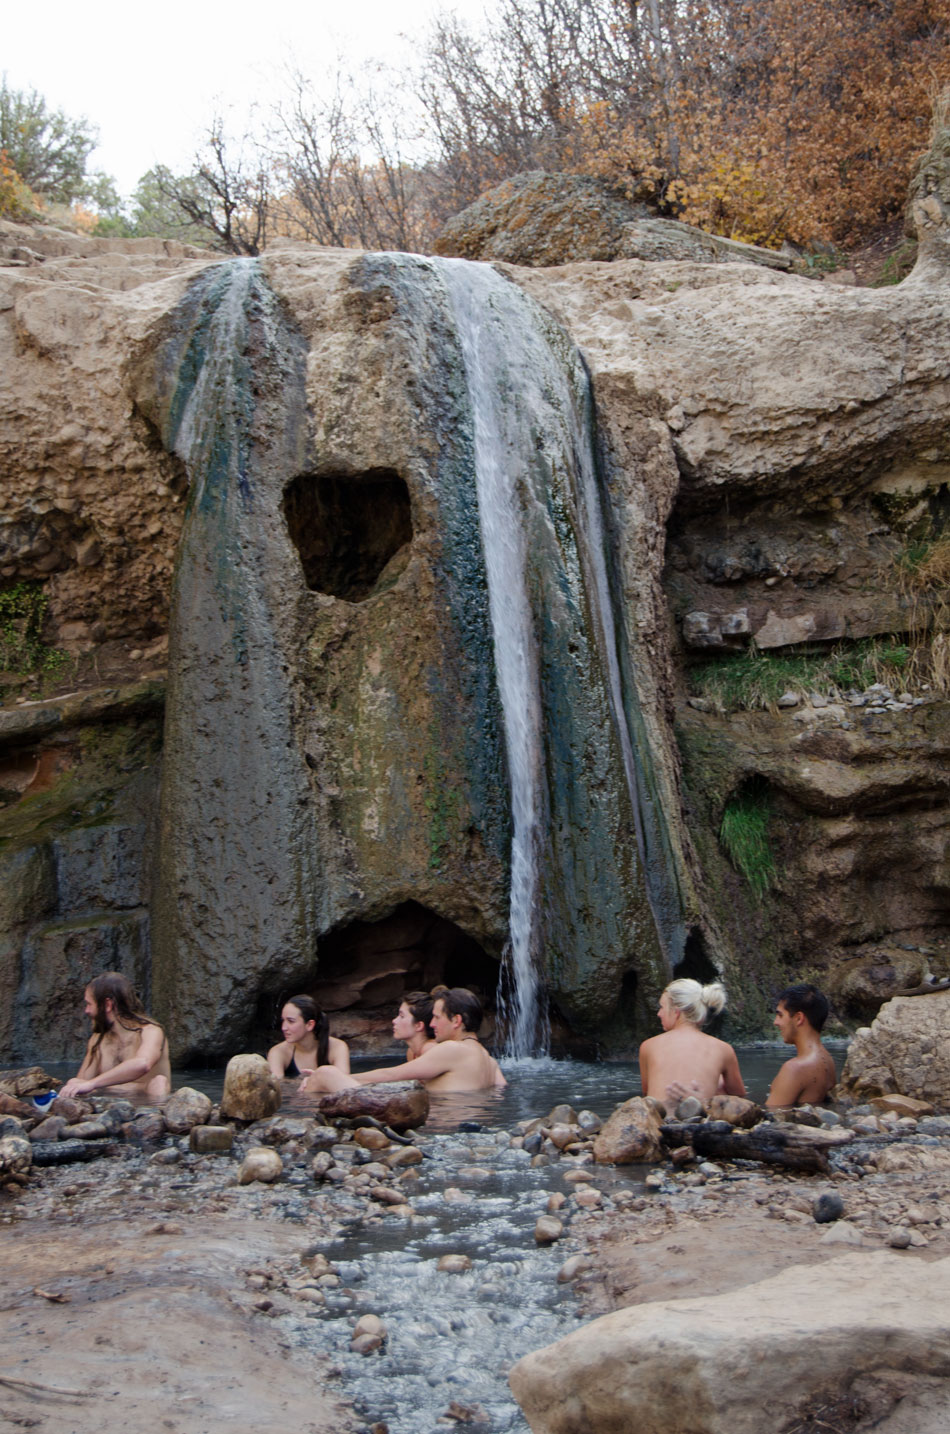 don leni gabay share nudist places in utah photos